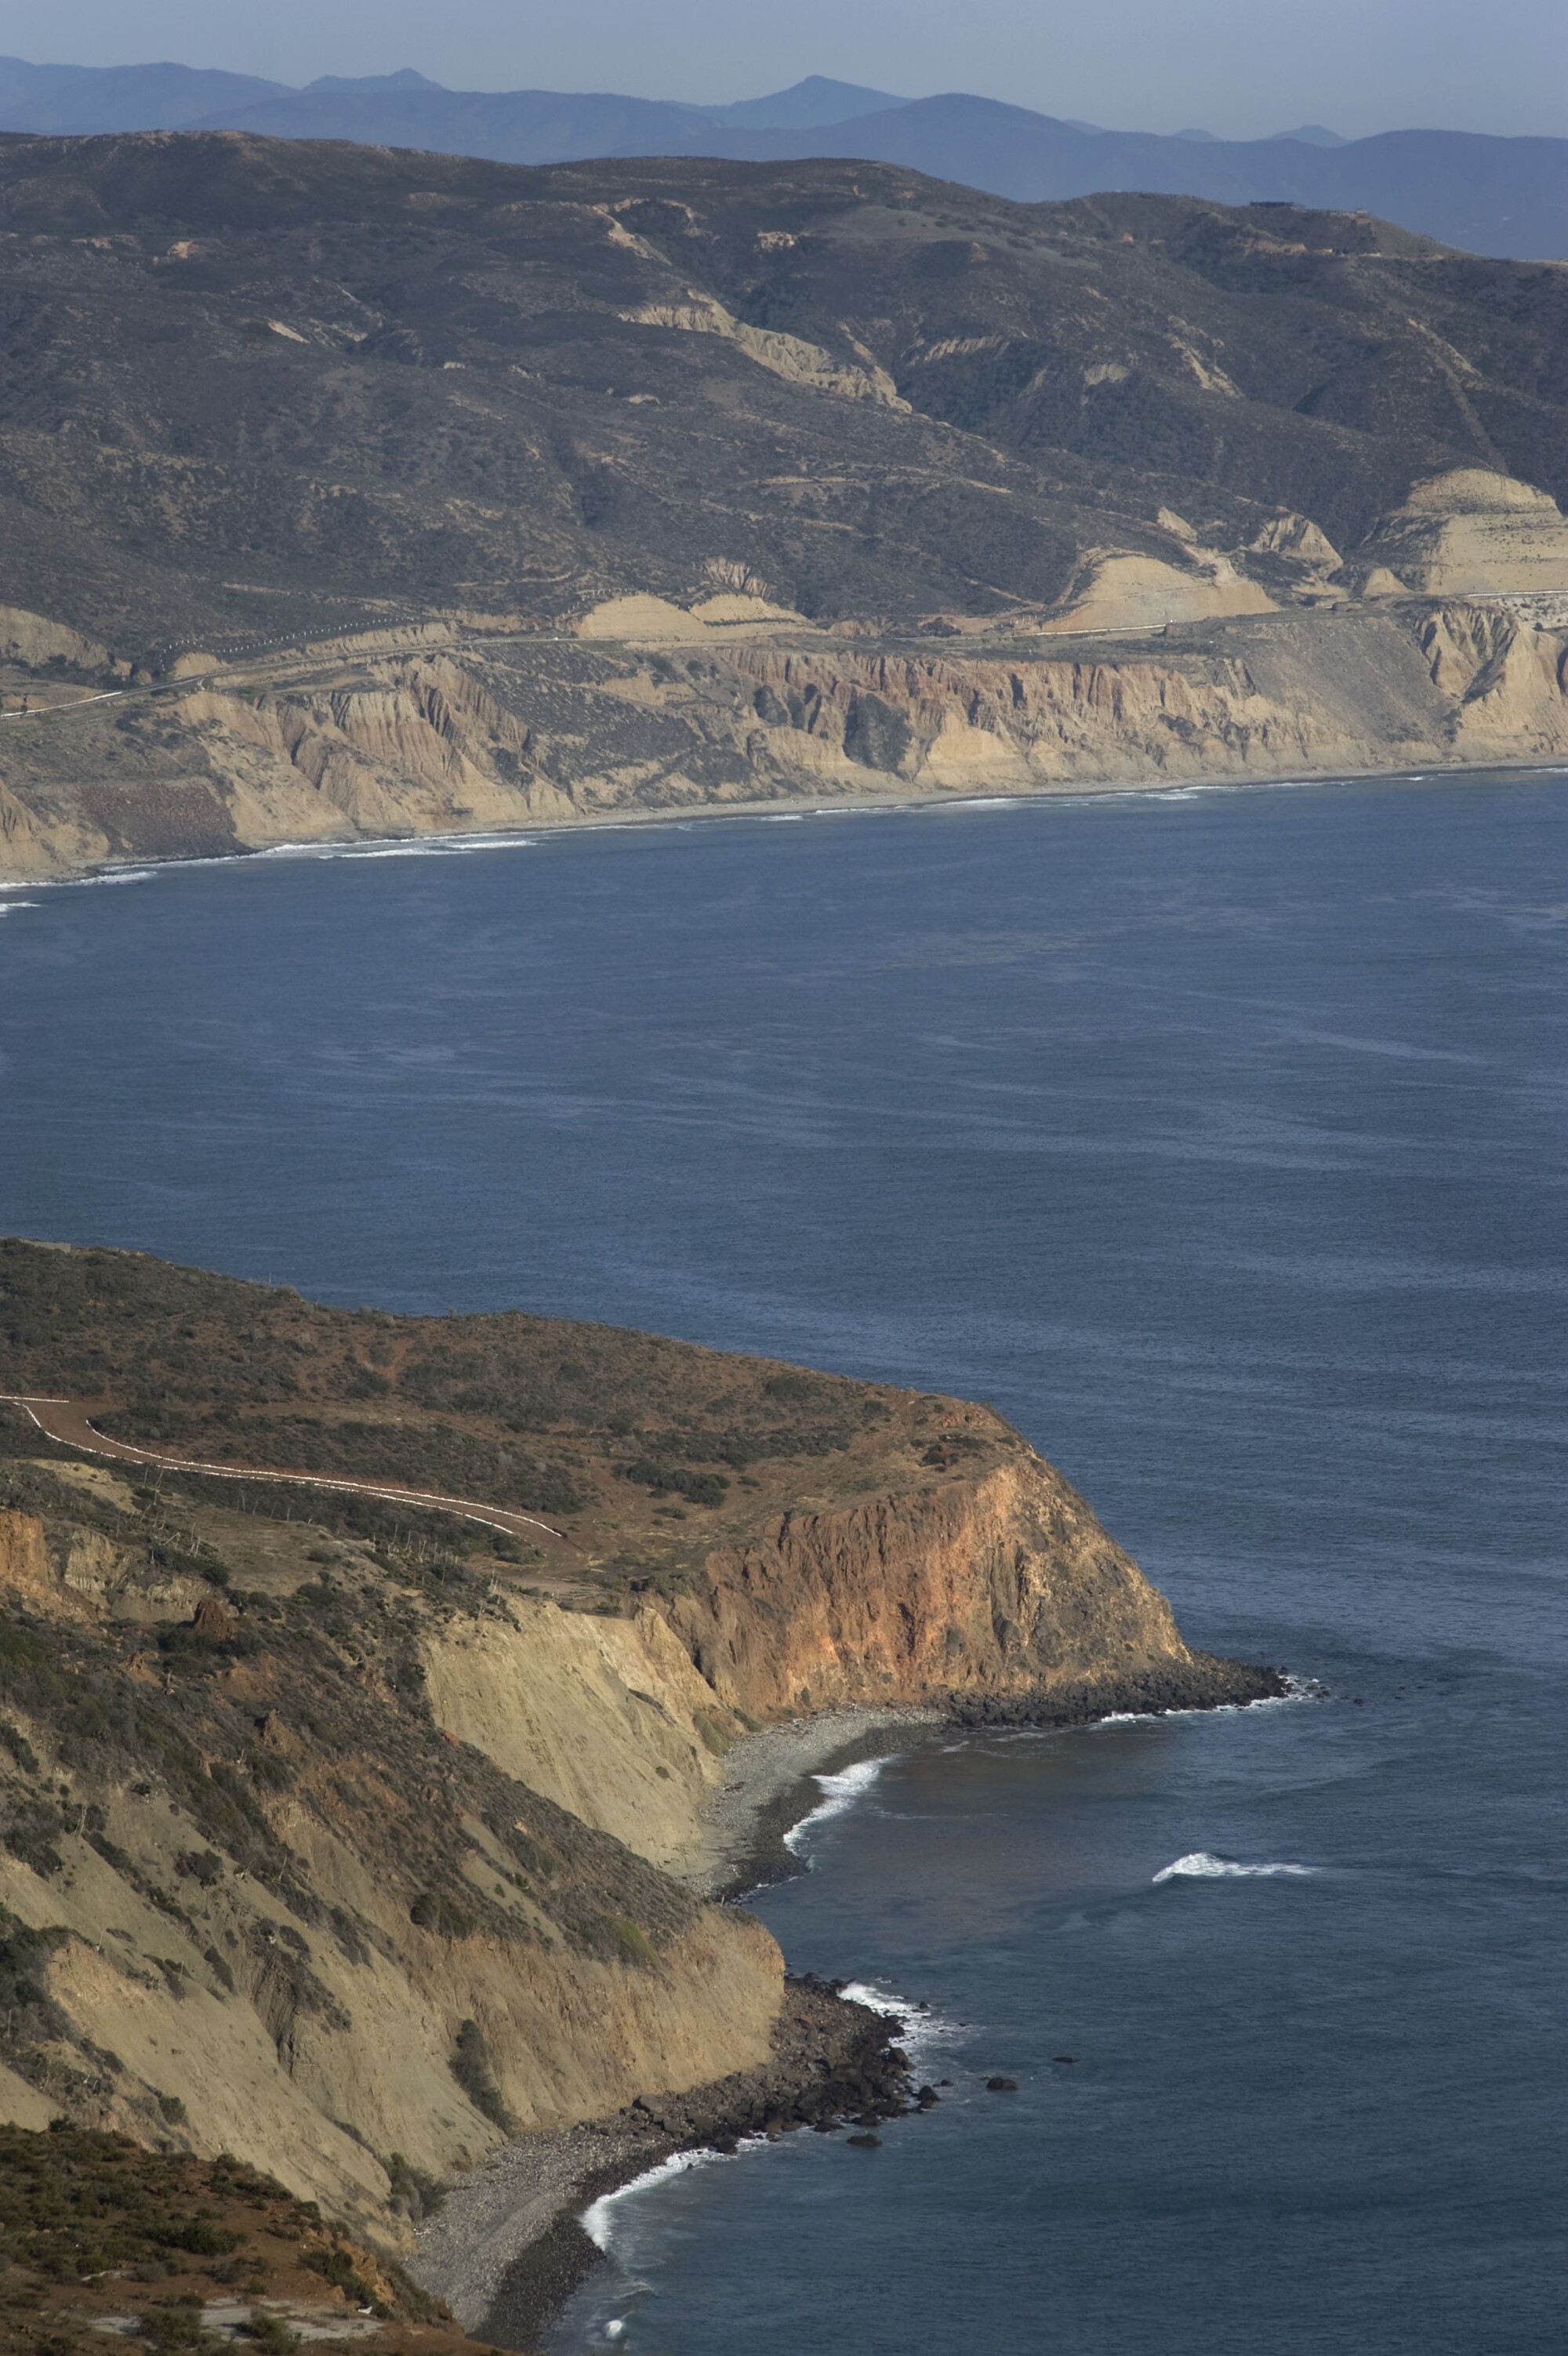 The view of the Baja California coast as seen from the Rosarito-Ensenada toll road north of Ensenada, Mexico.